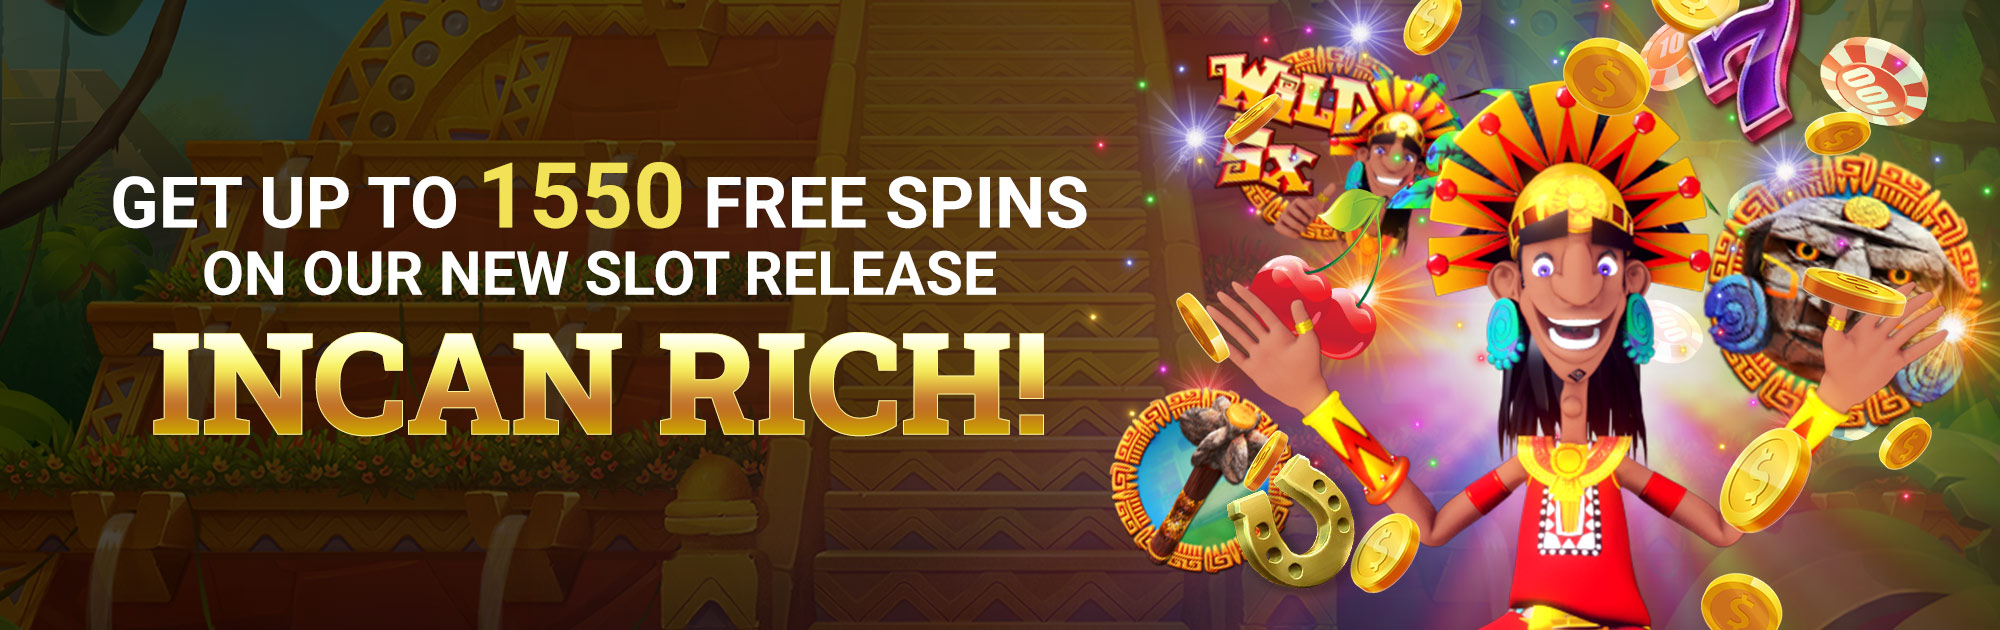 Incan Rich Free Spins